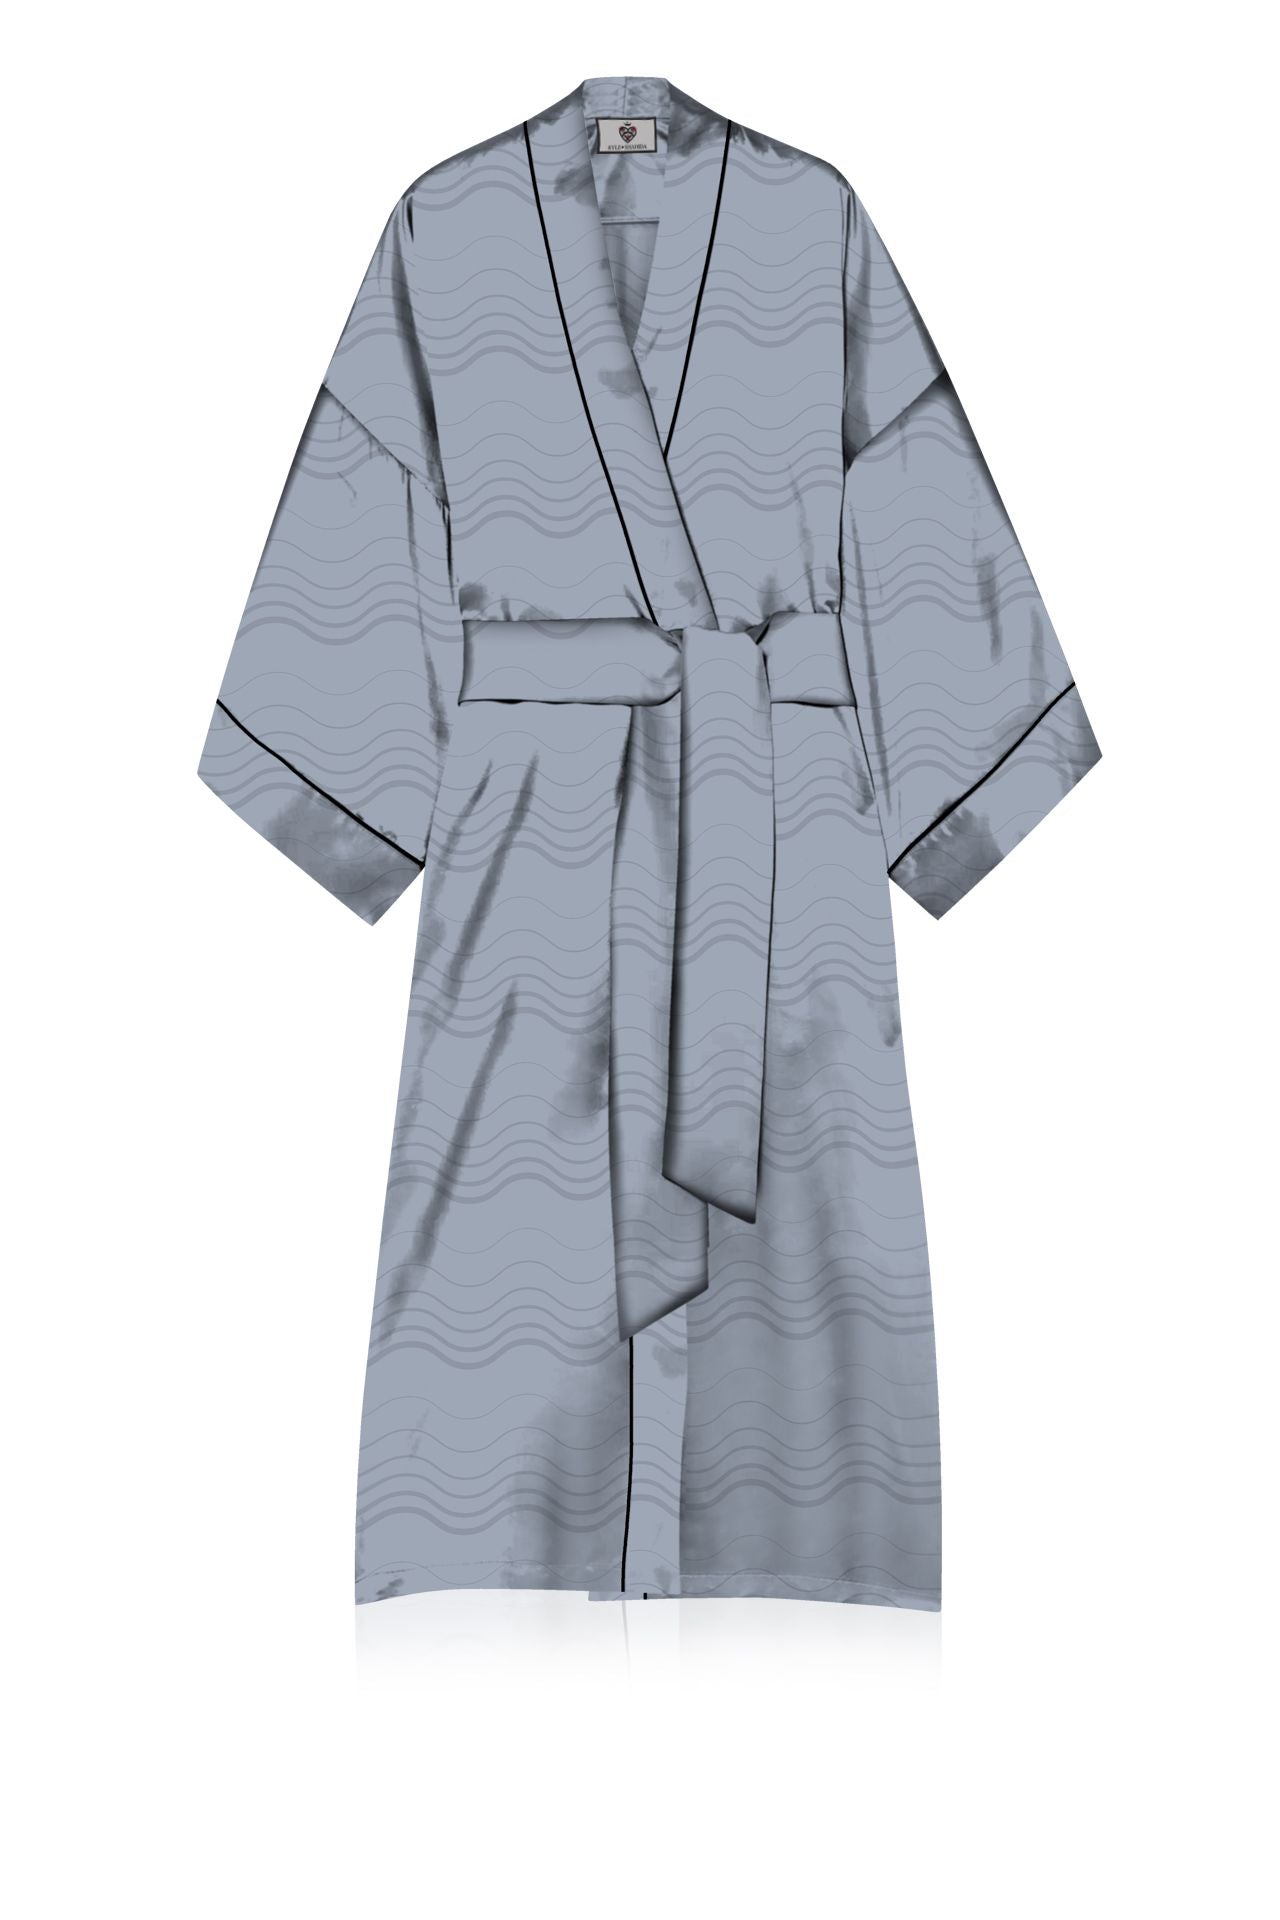 "womens gray robe" "printed silk robe" "plus size short kimono" "Kyle X Shahida"